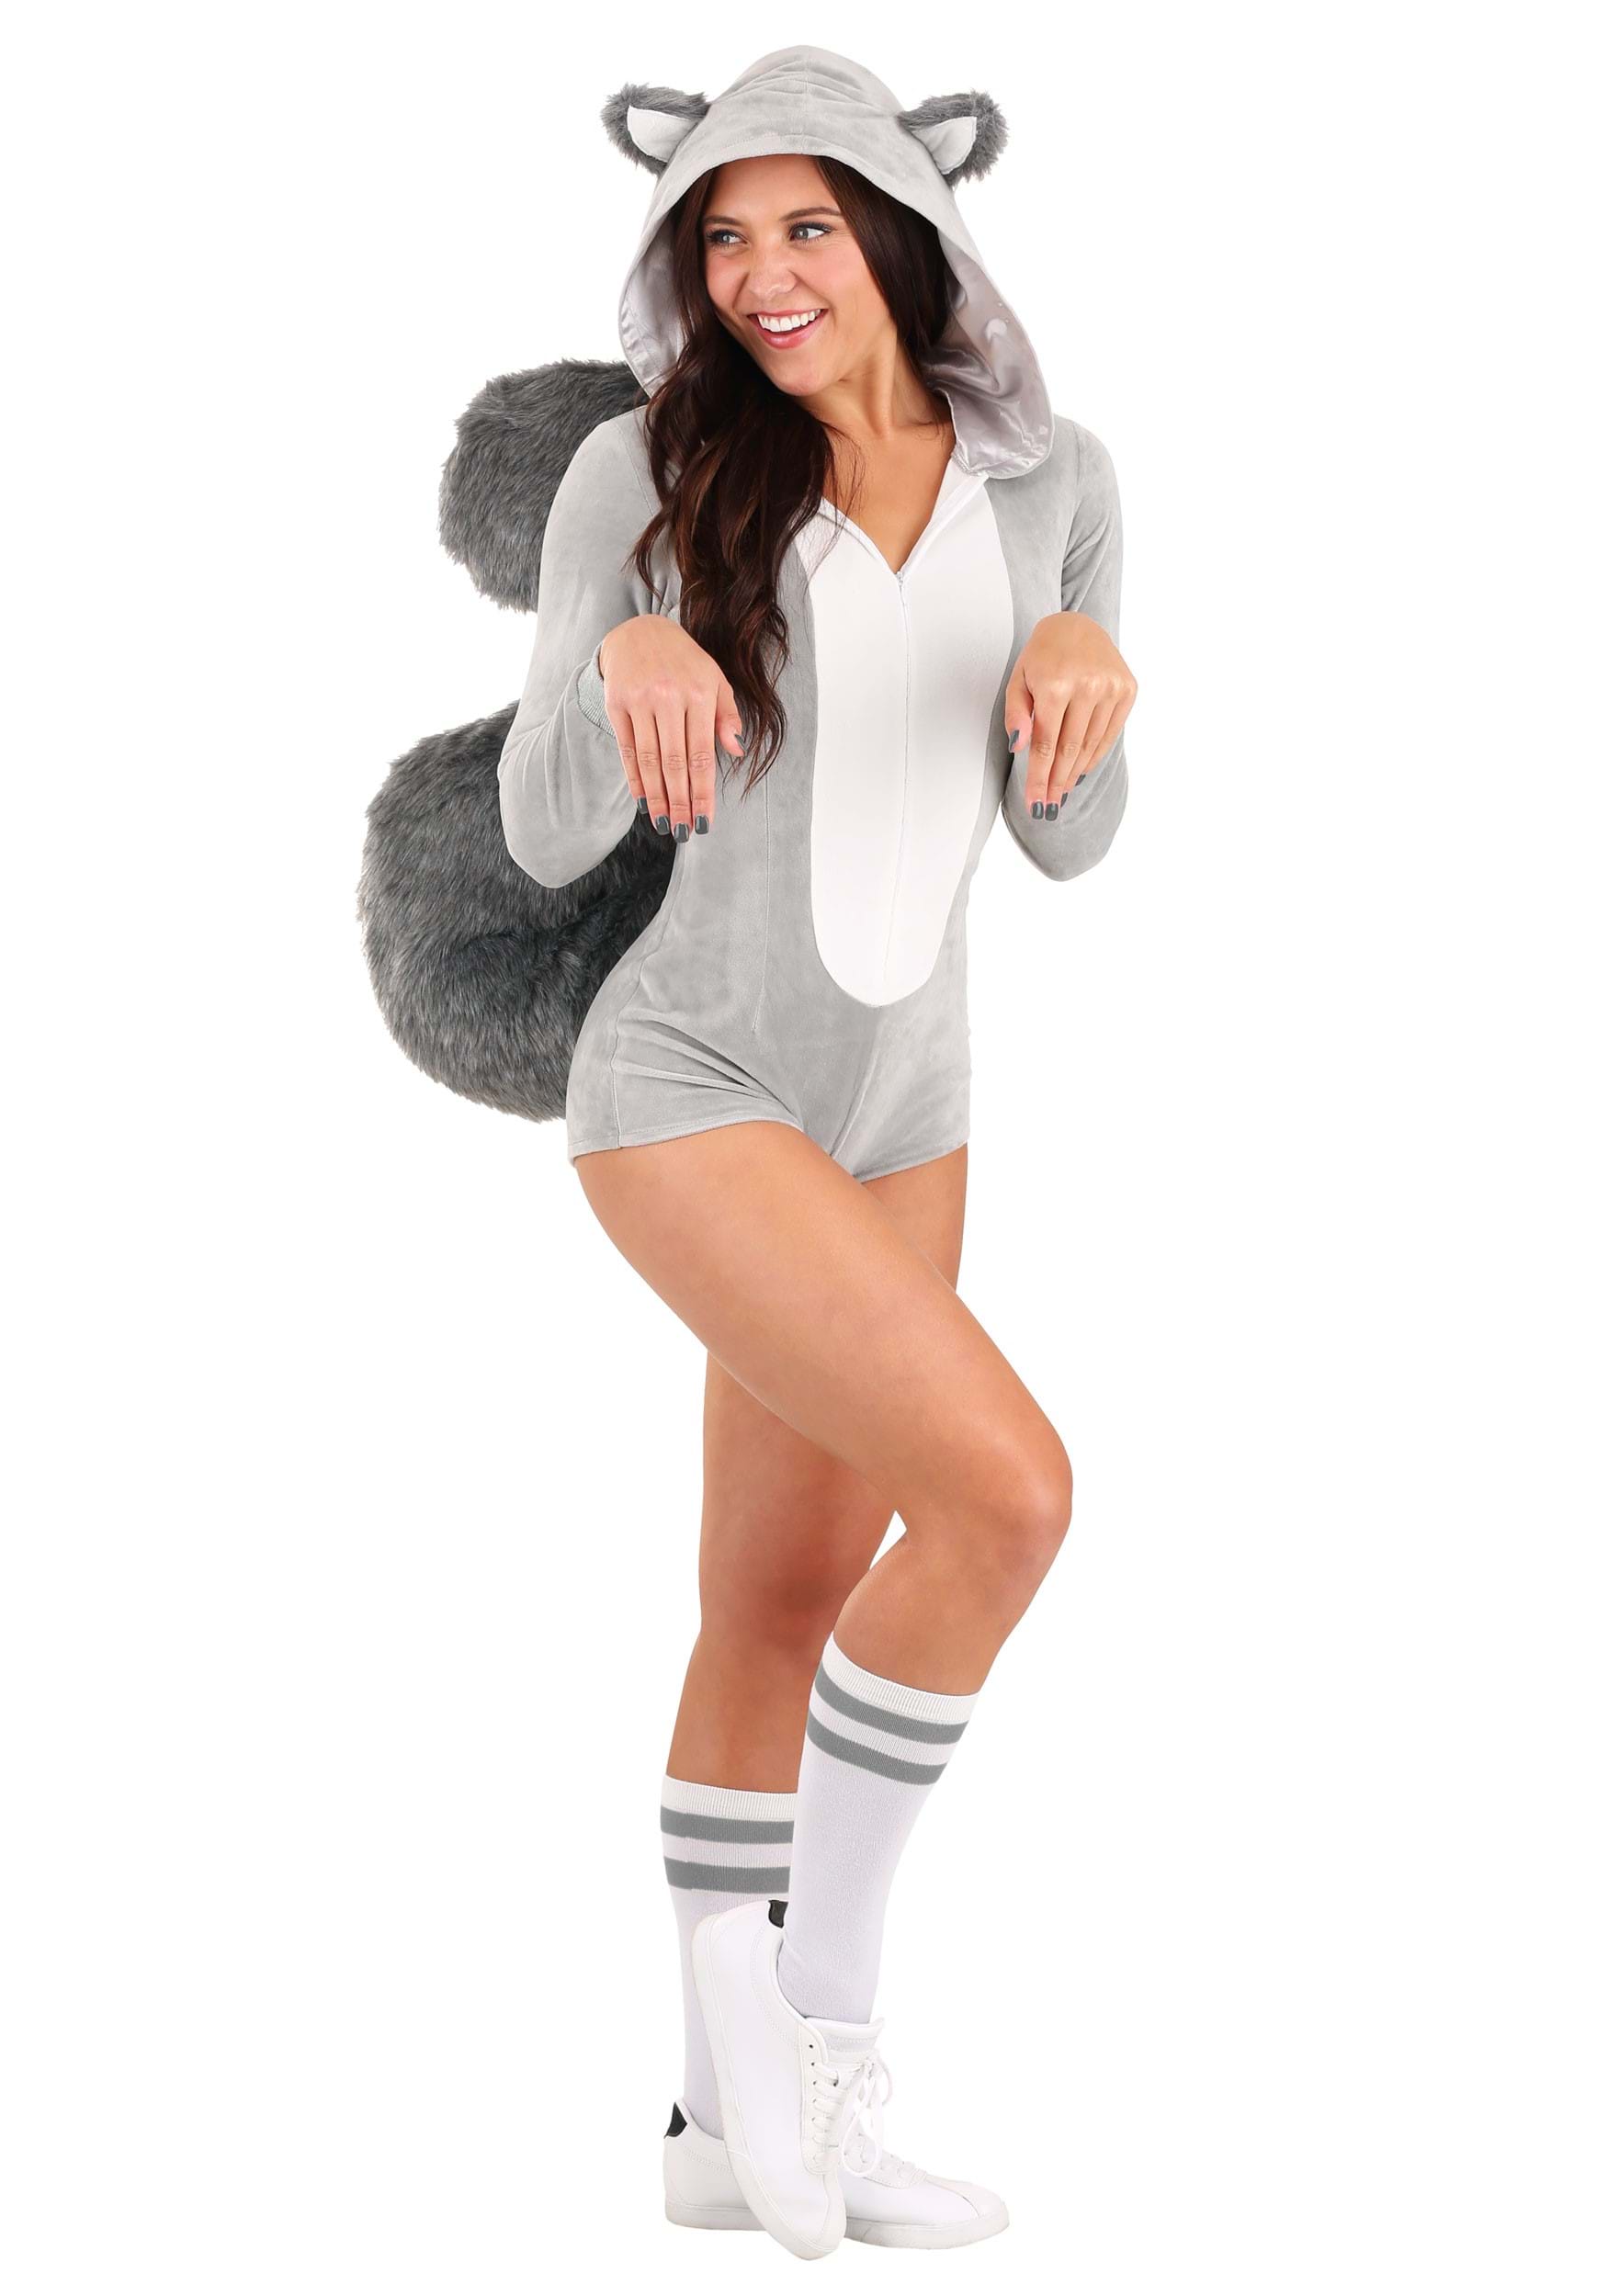 Image of Sassy Squirrel Women's Costume ID FUN1353AD-XS